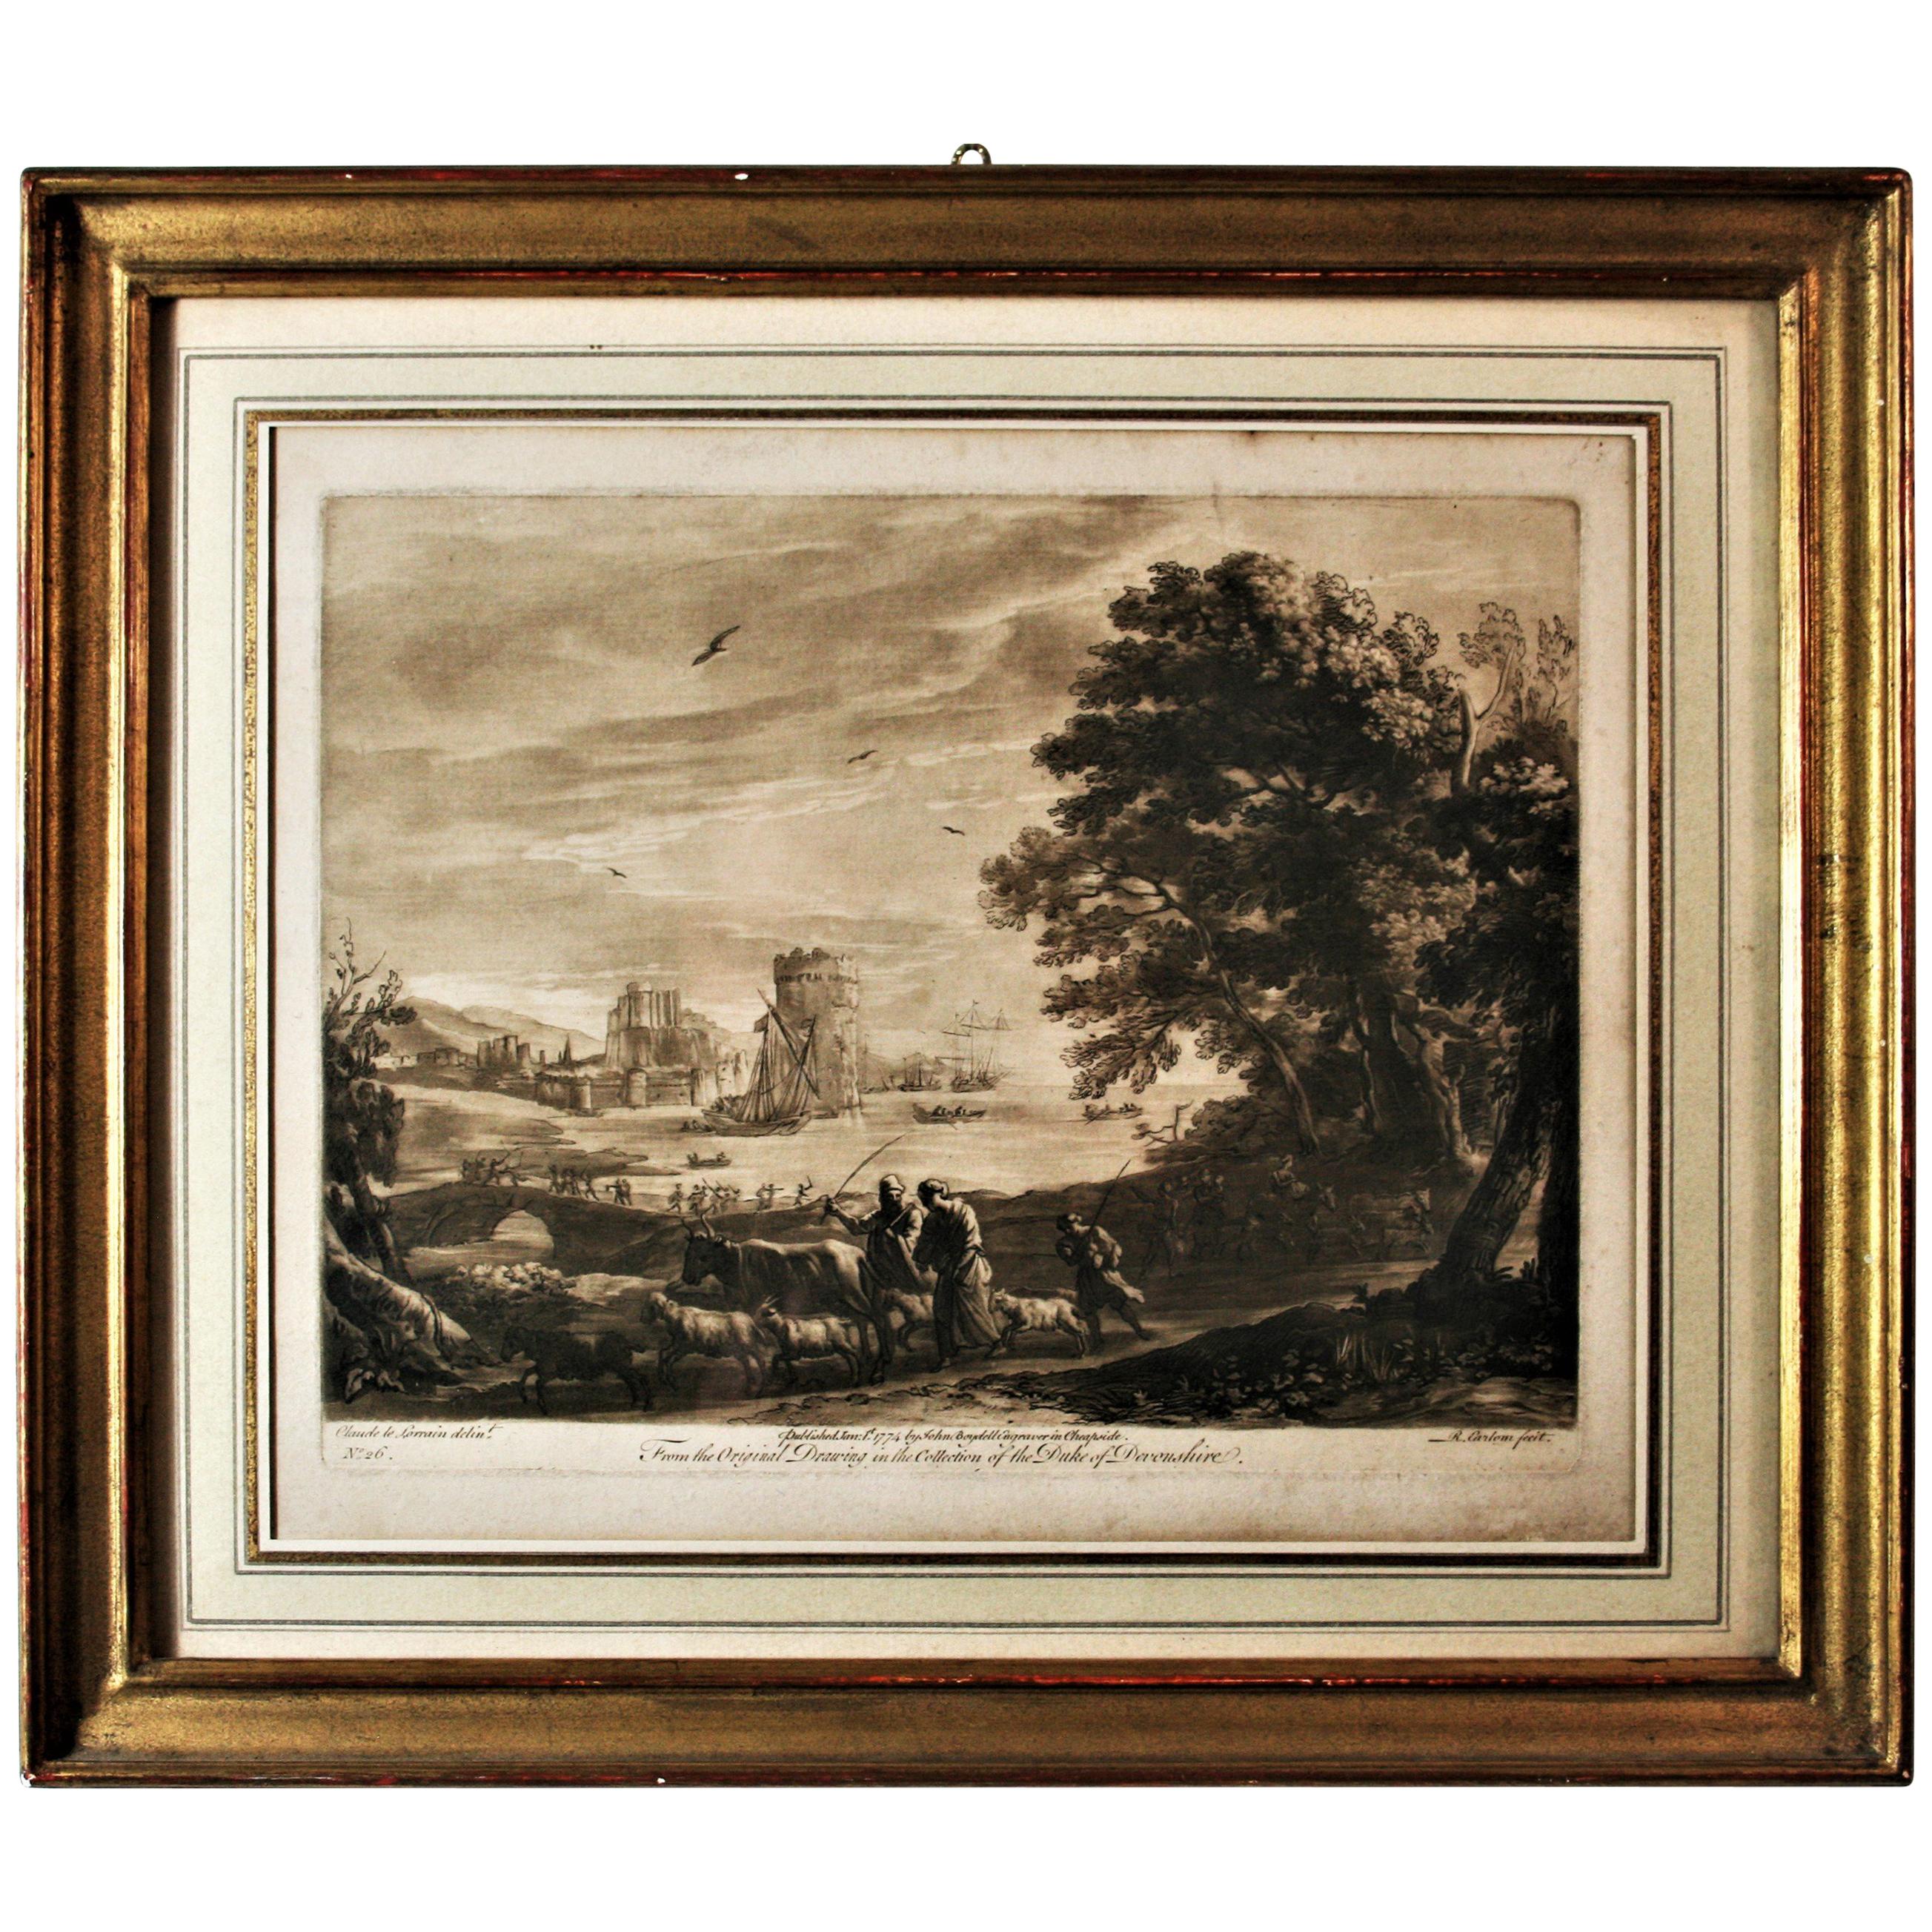 Richard Earlom Engraving "Landscape" after Claude Le Lorrain, Framed